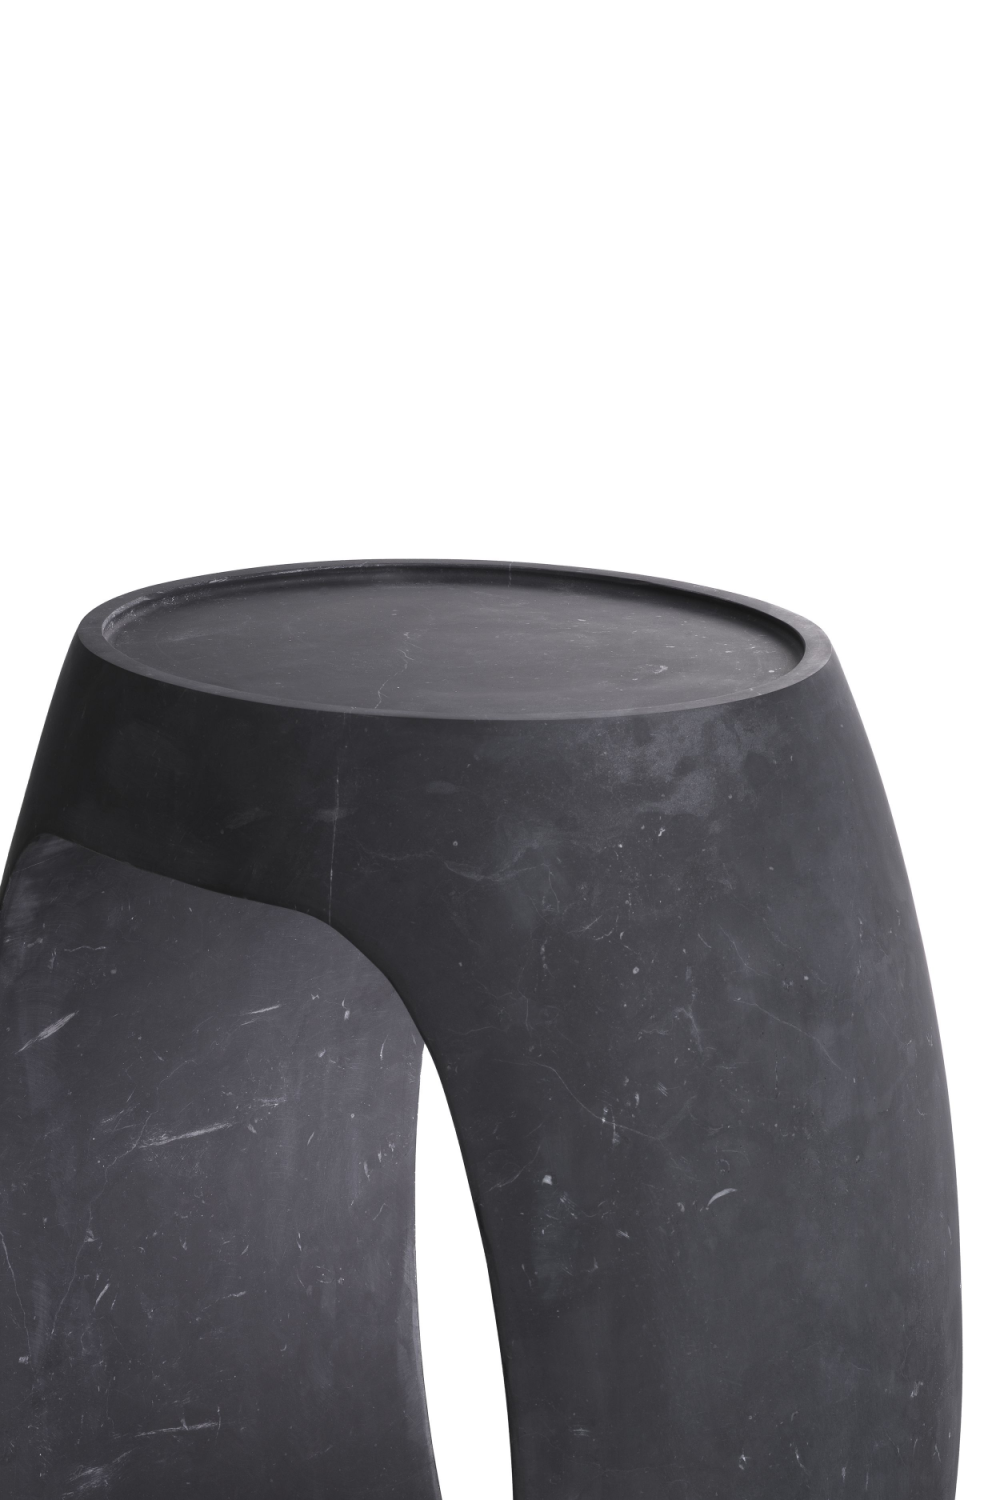 Black Marble Round Side Table | Eichholtz Clipper High | OROA